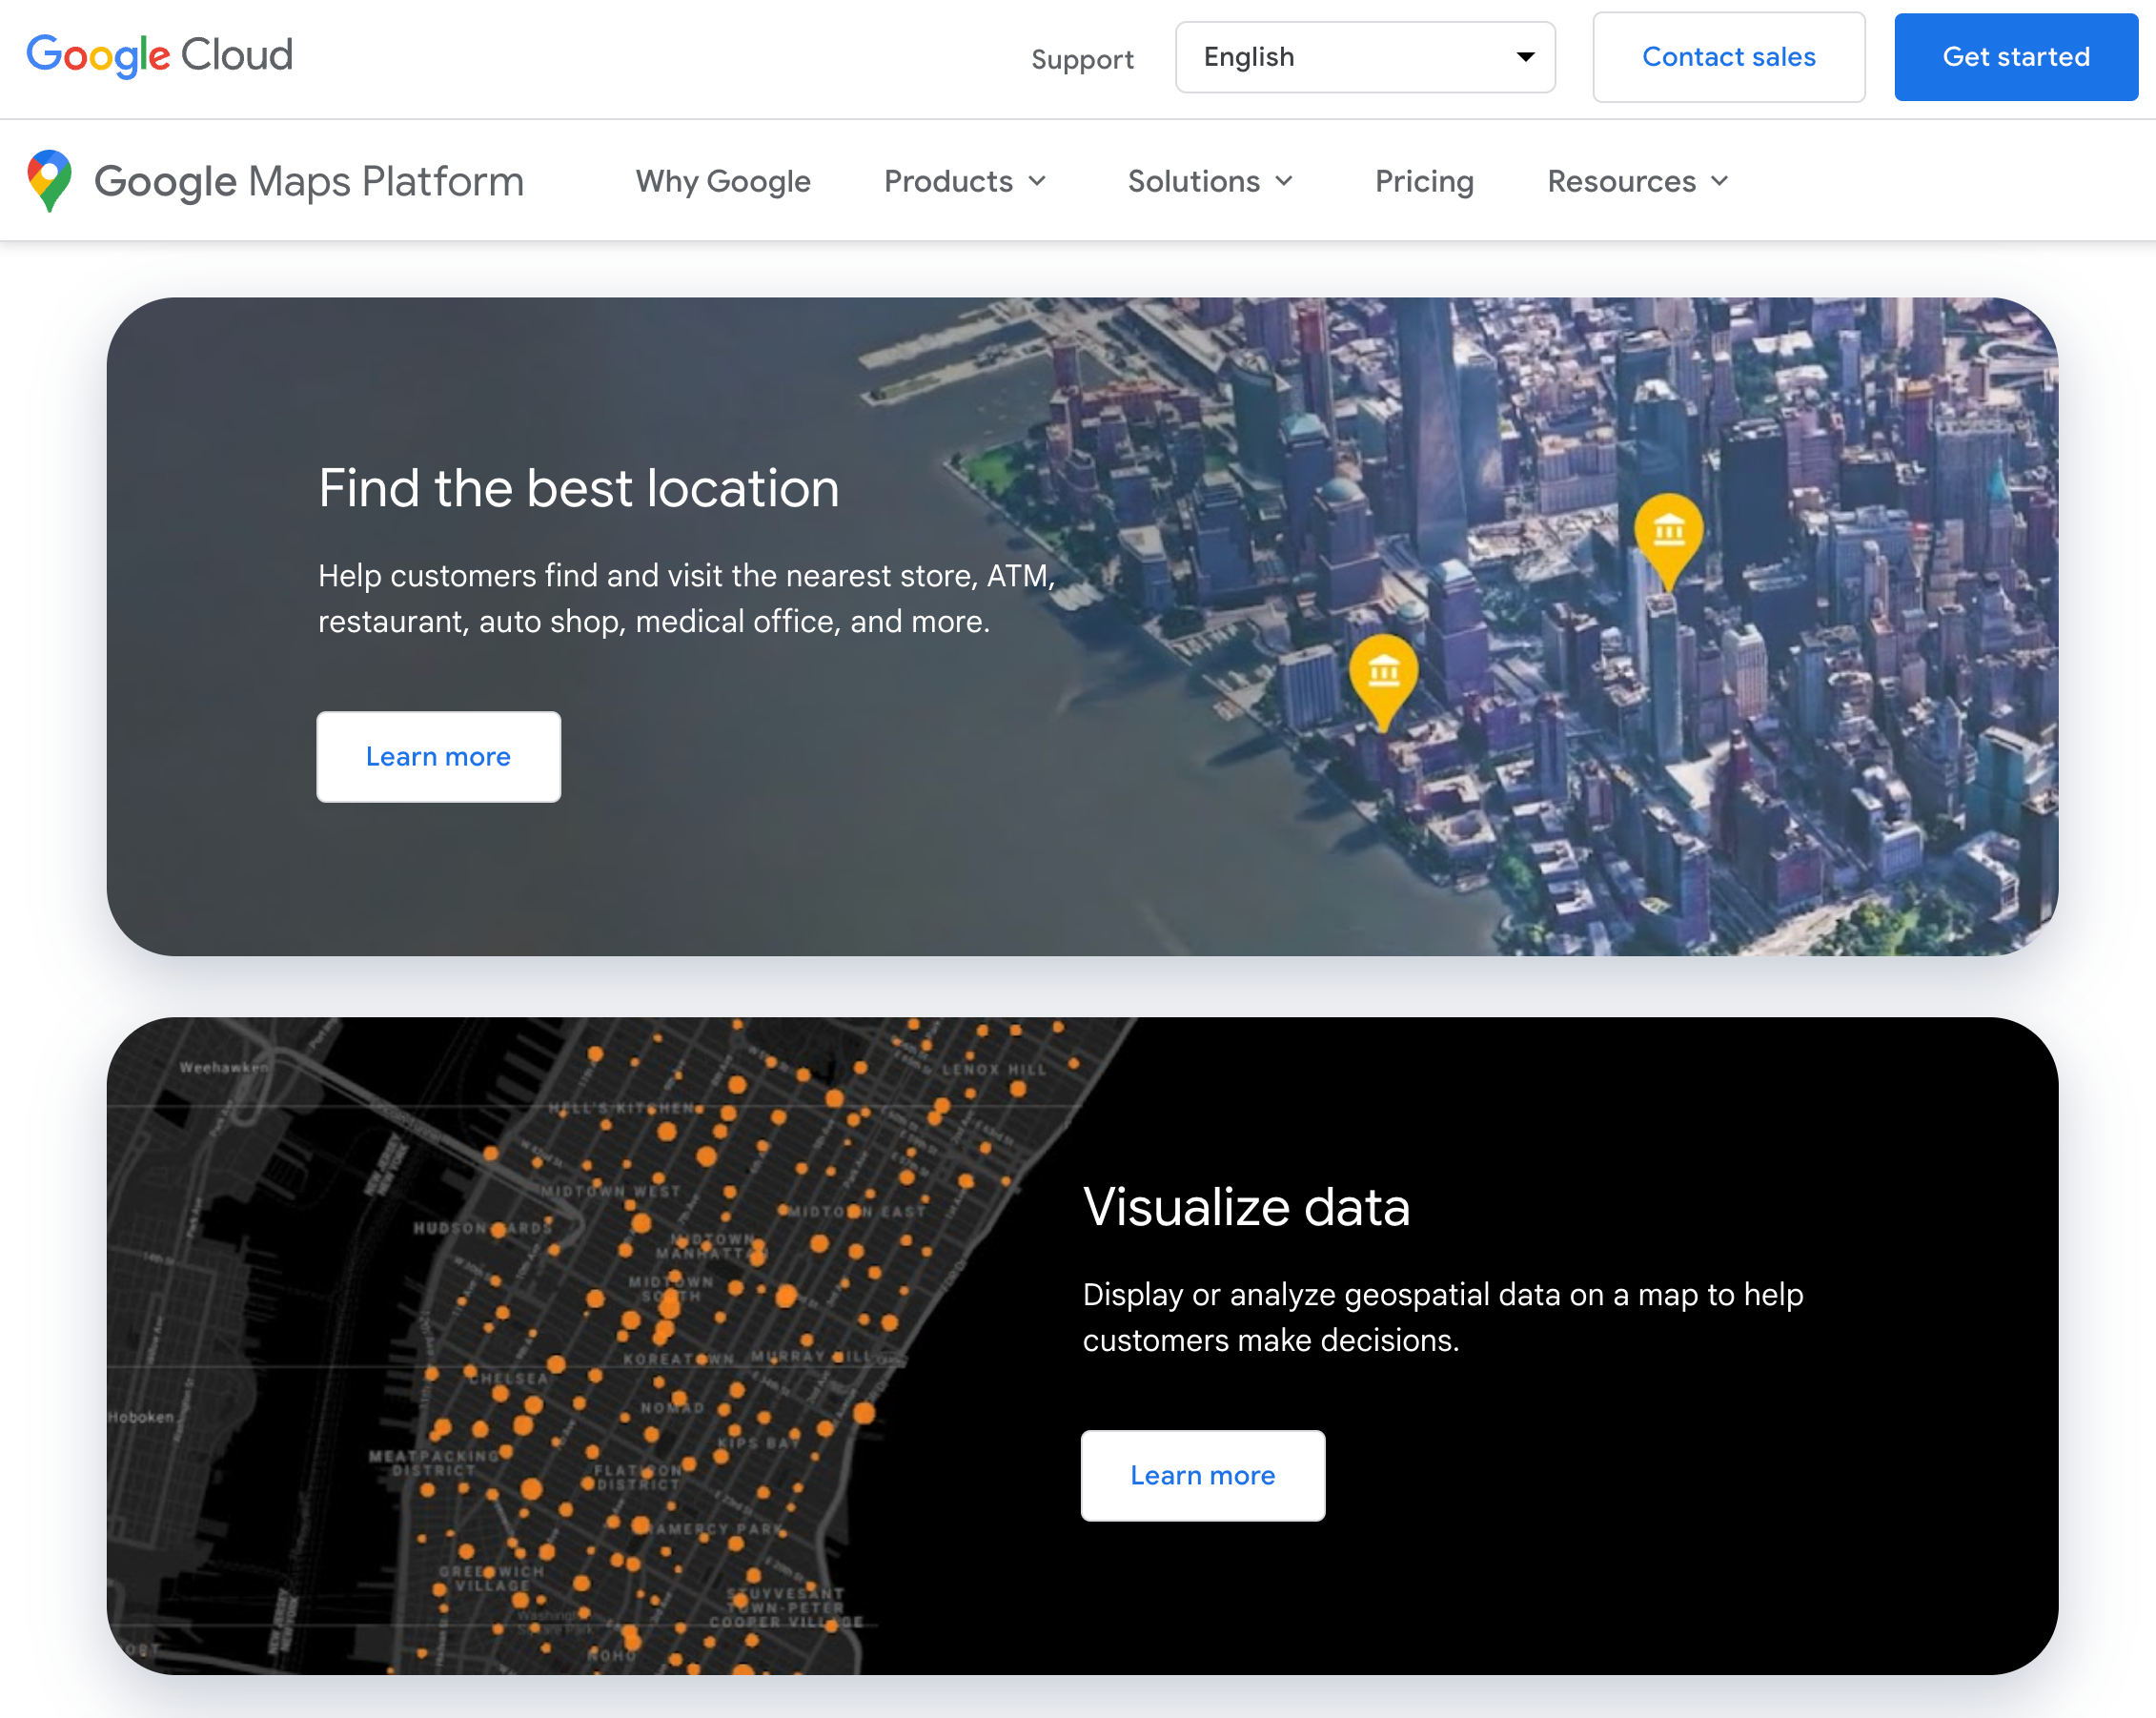 Google Maps Platform homepage